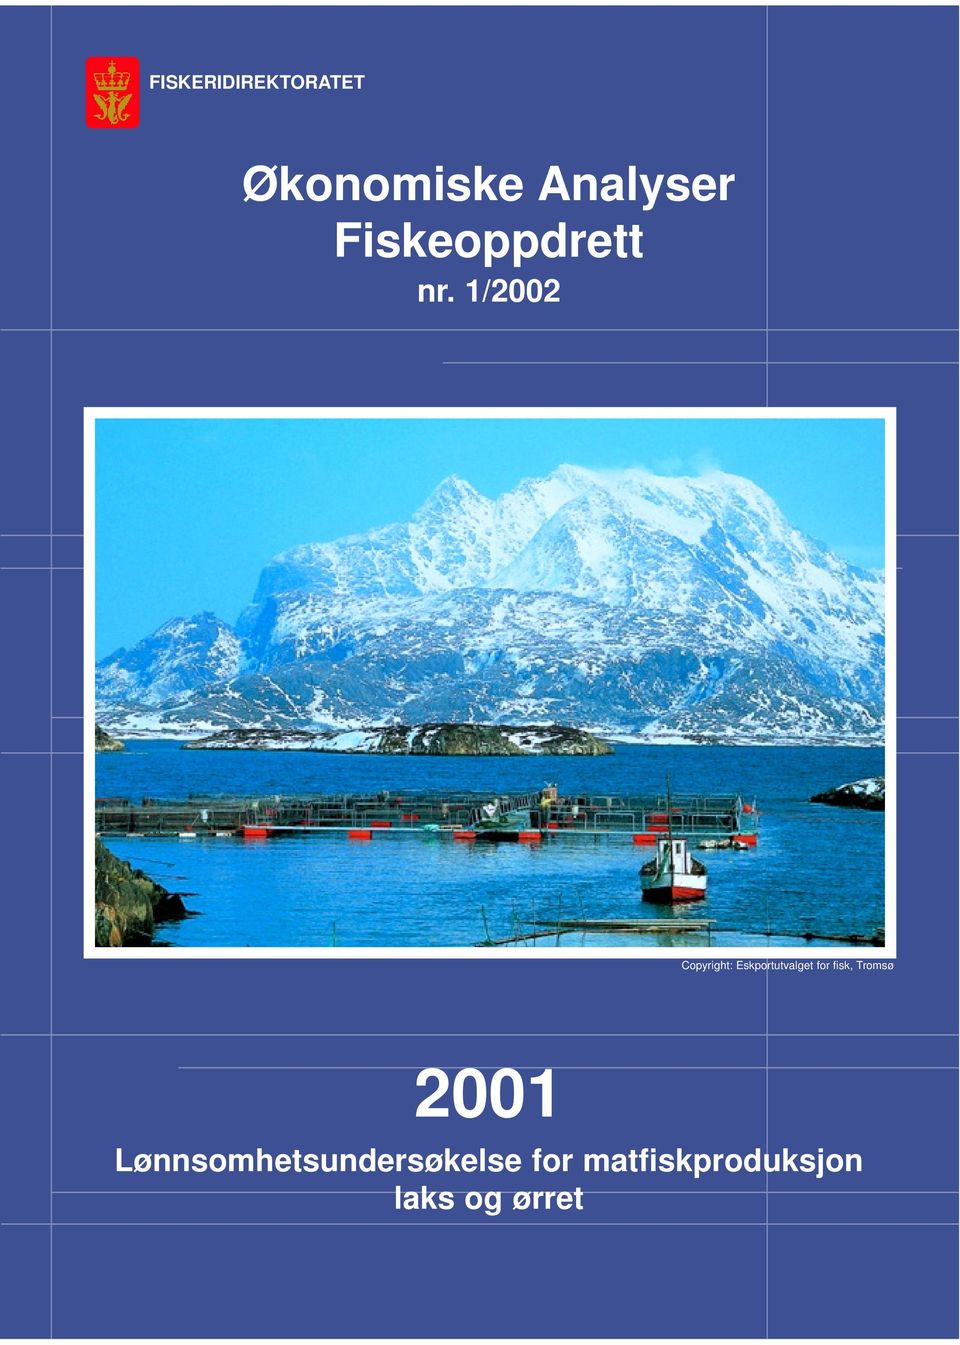 1/2002 Copyright: Eskportutvalget for fisk,